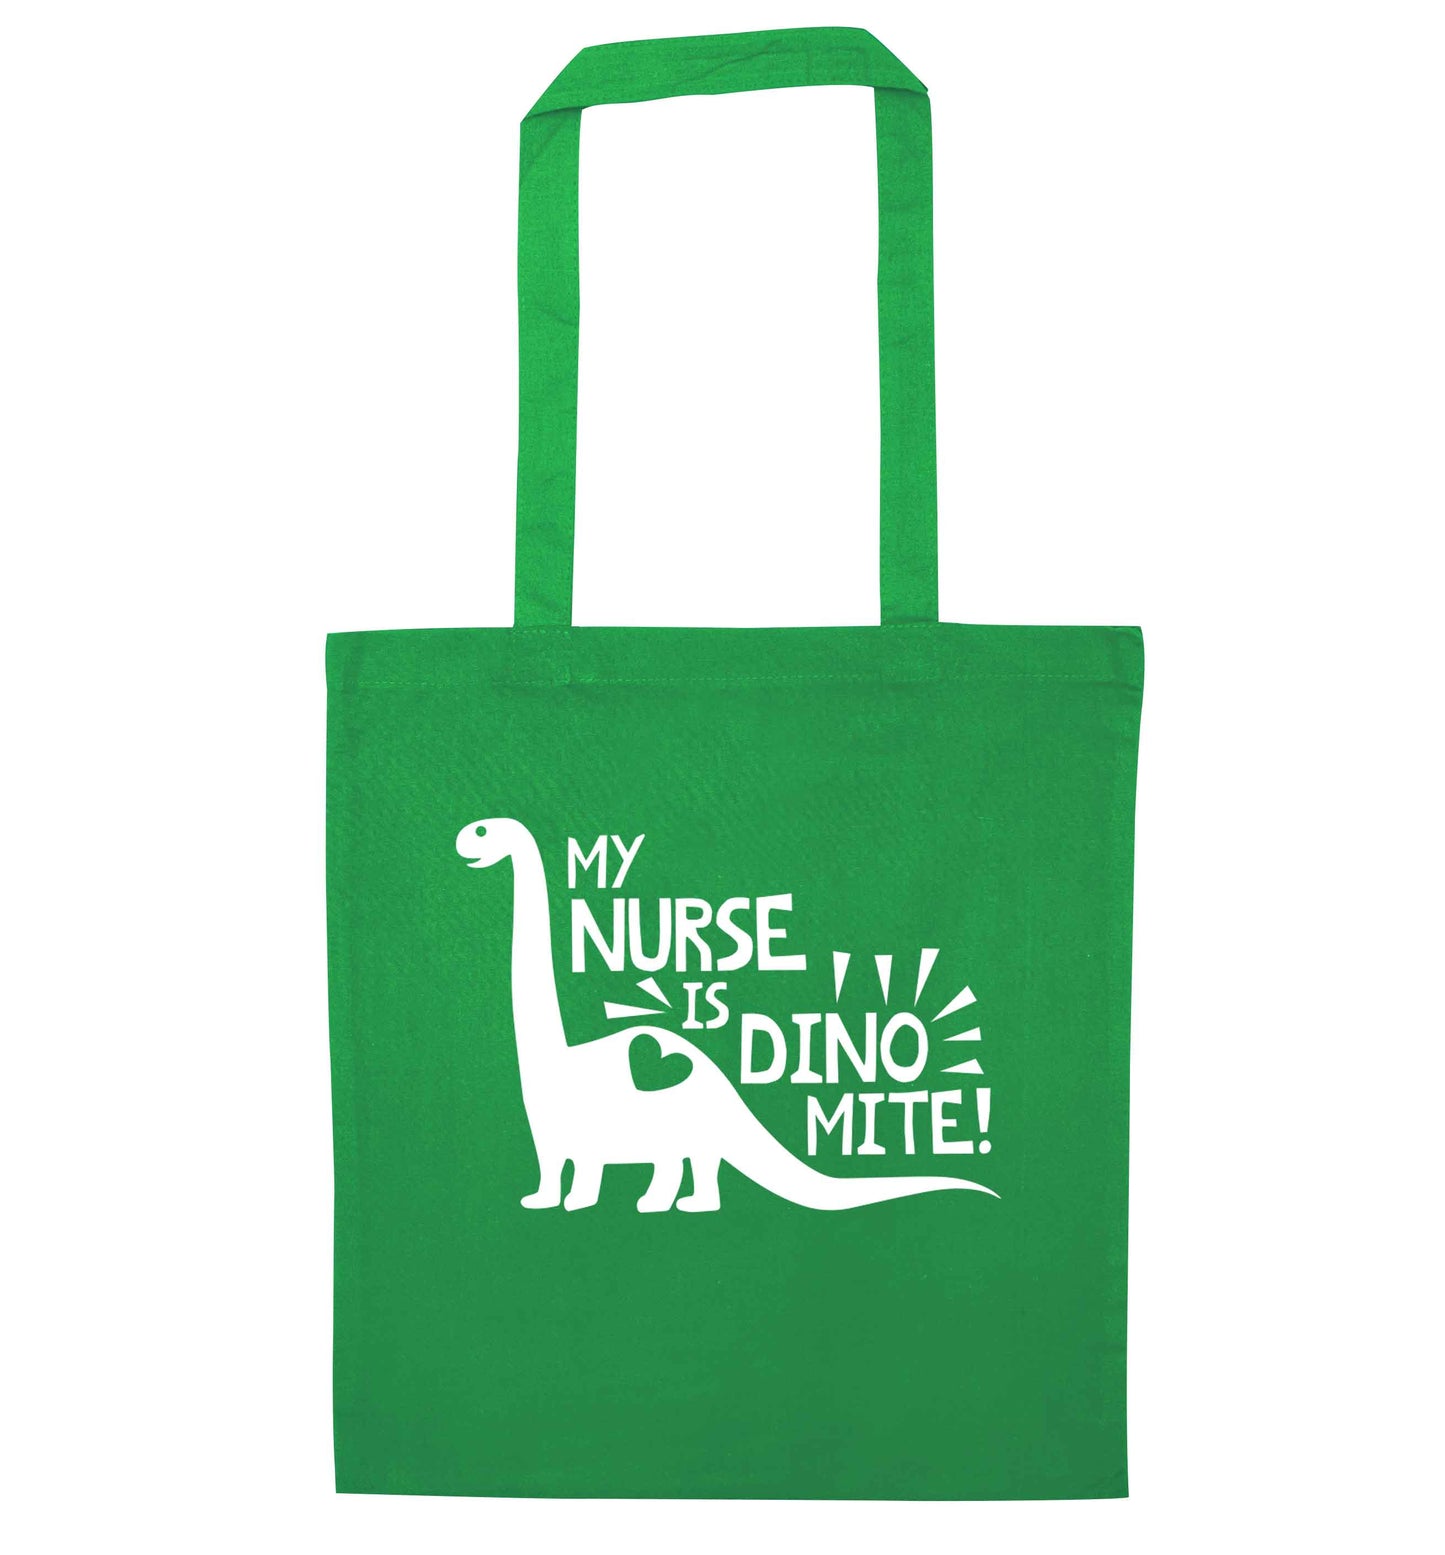 My nurse is dinomite! green tote bag